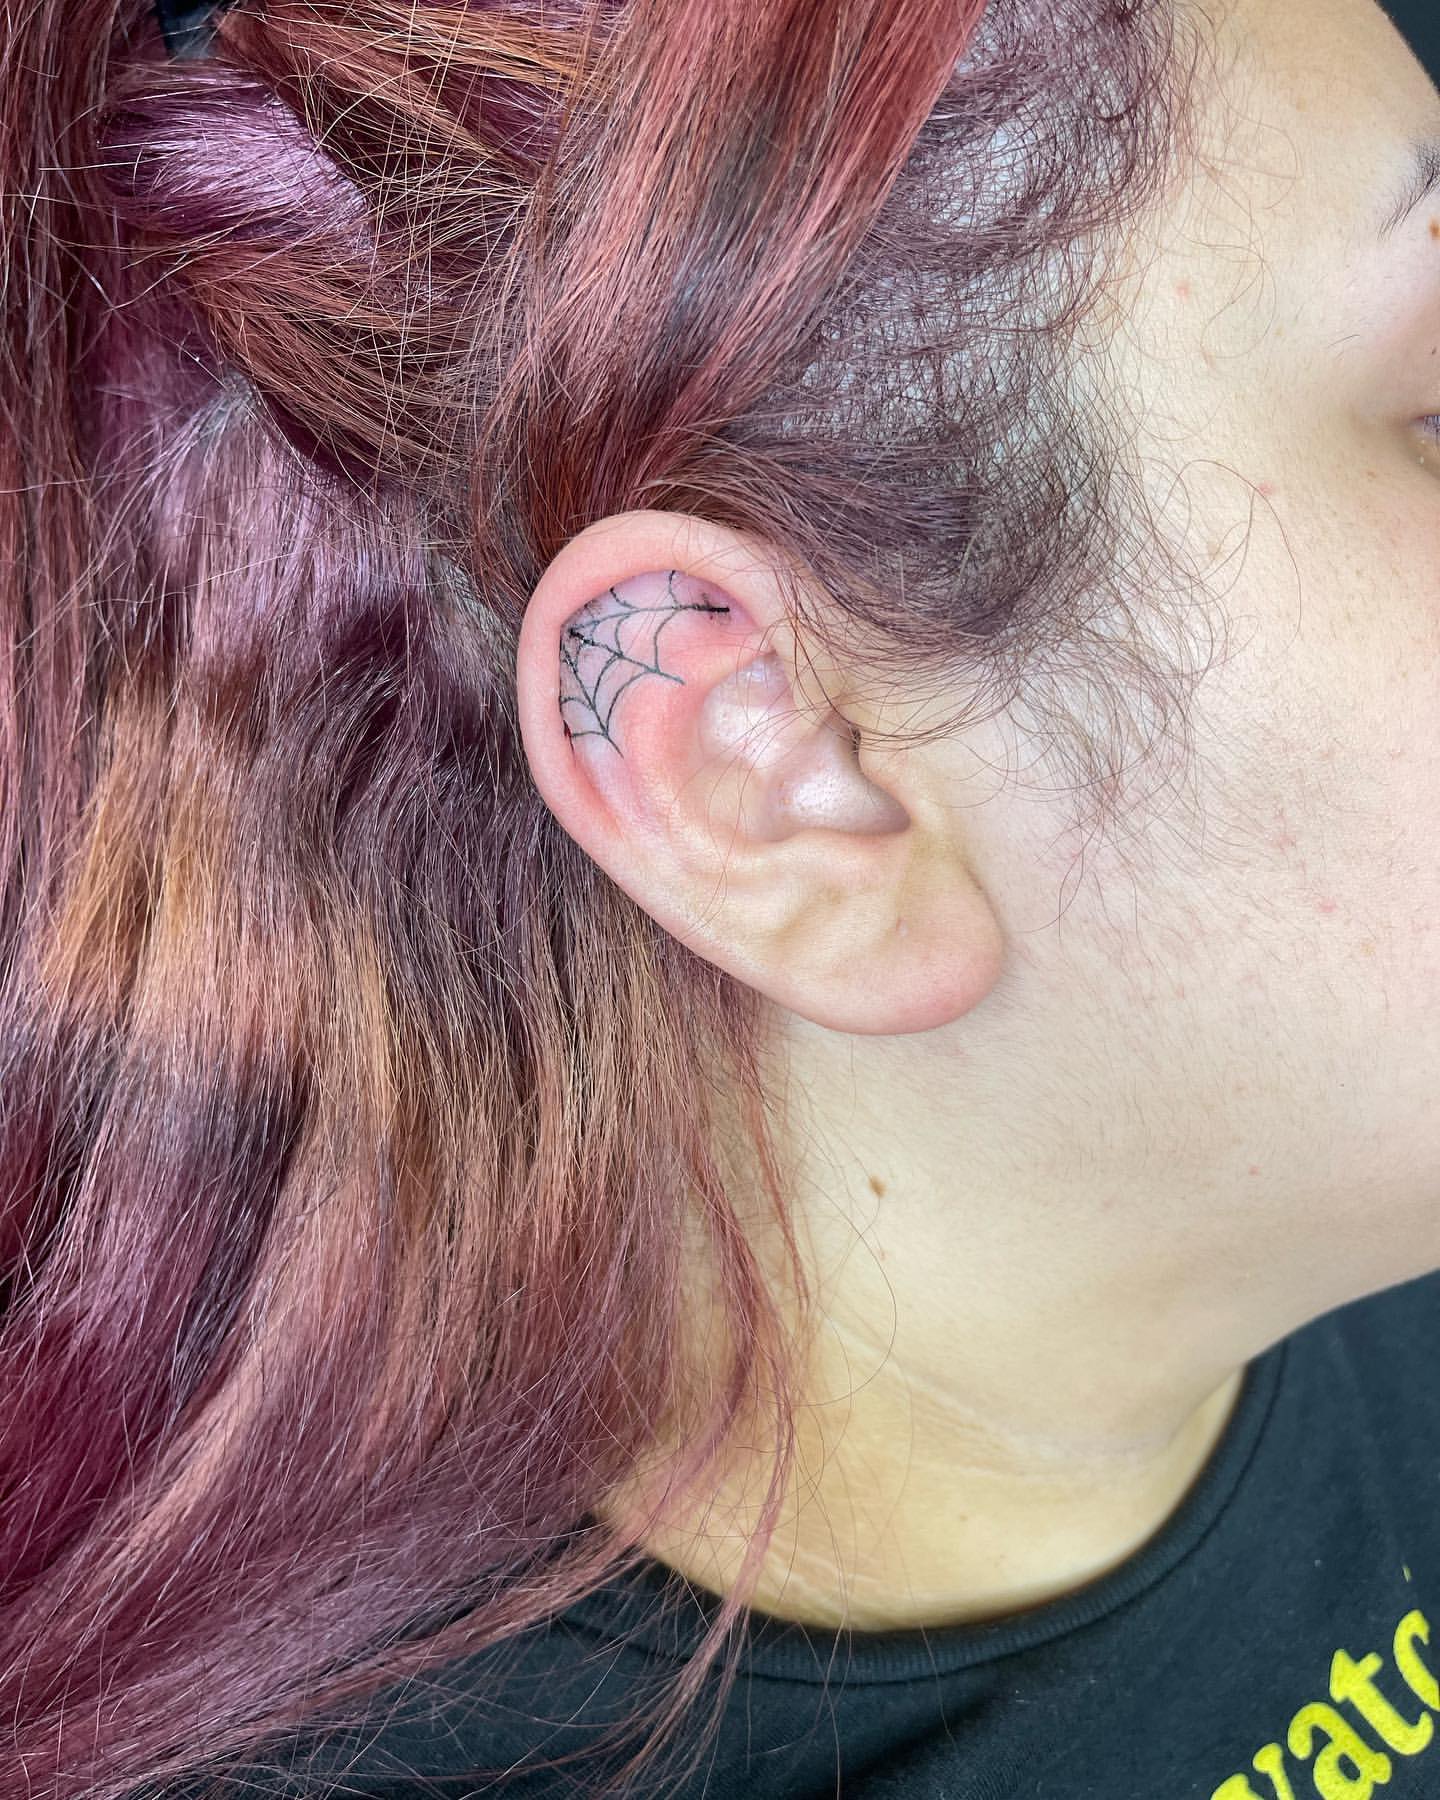 Ear Tattoos